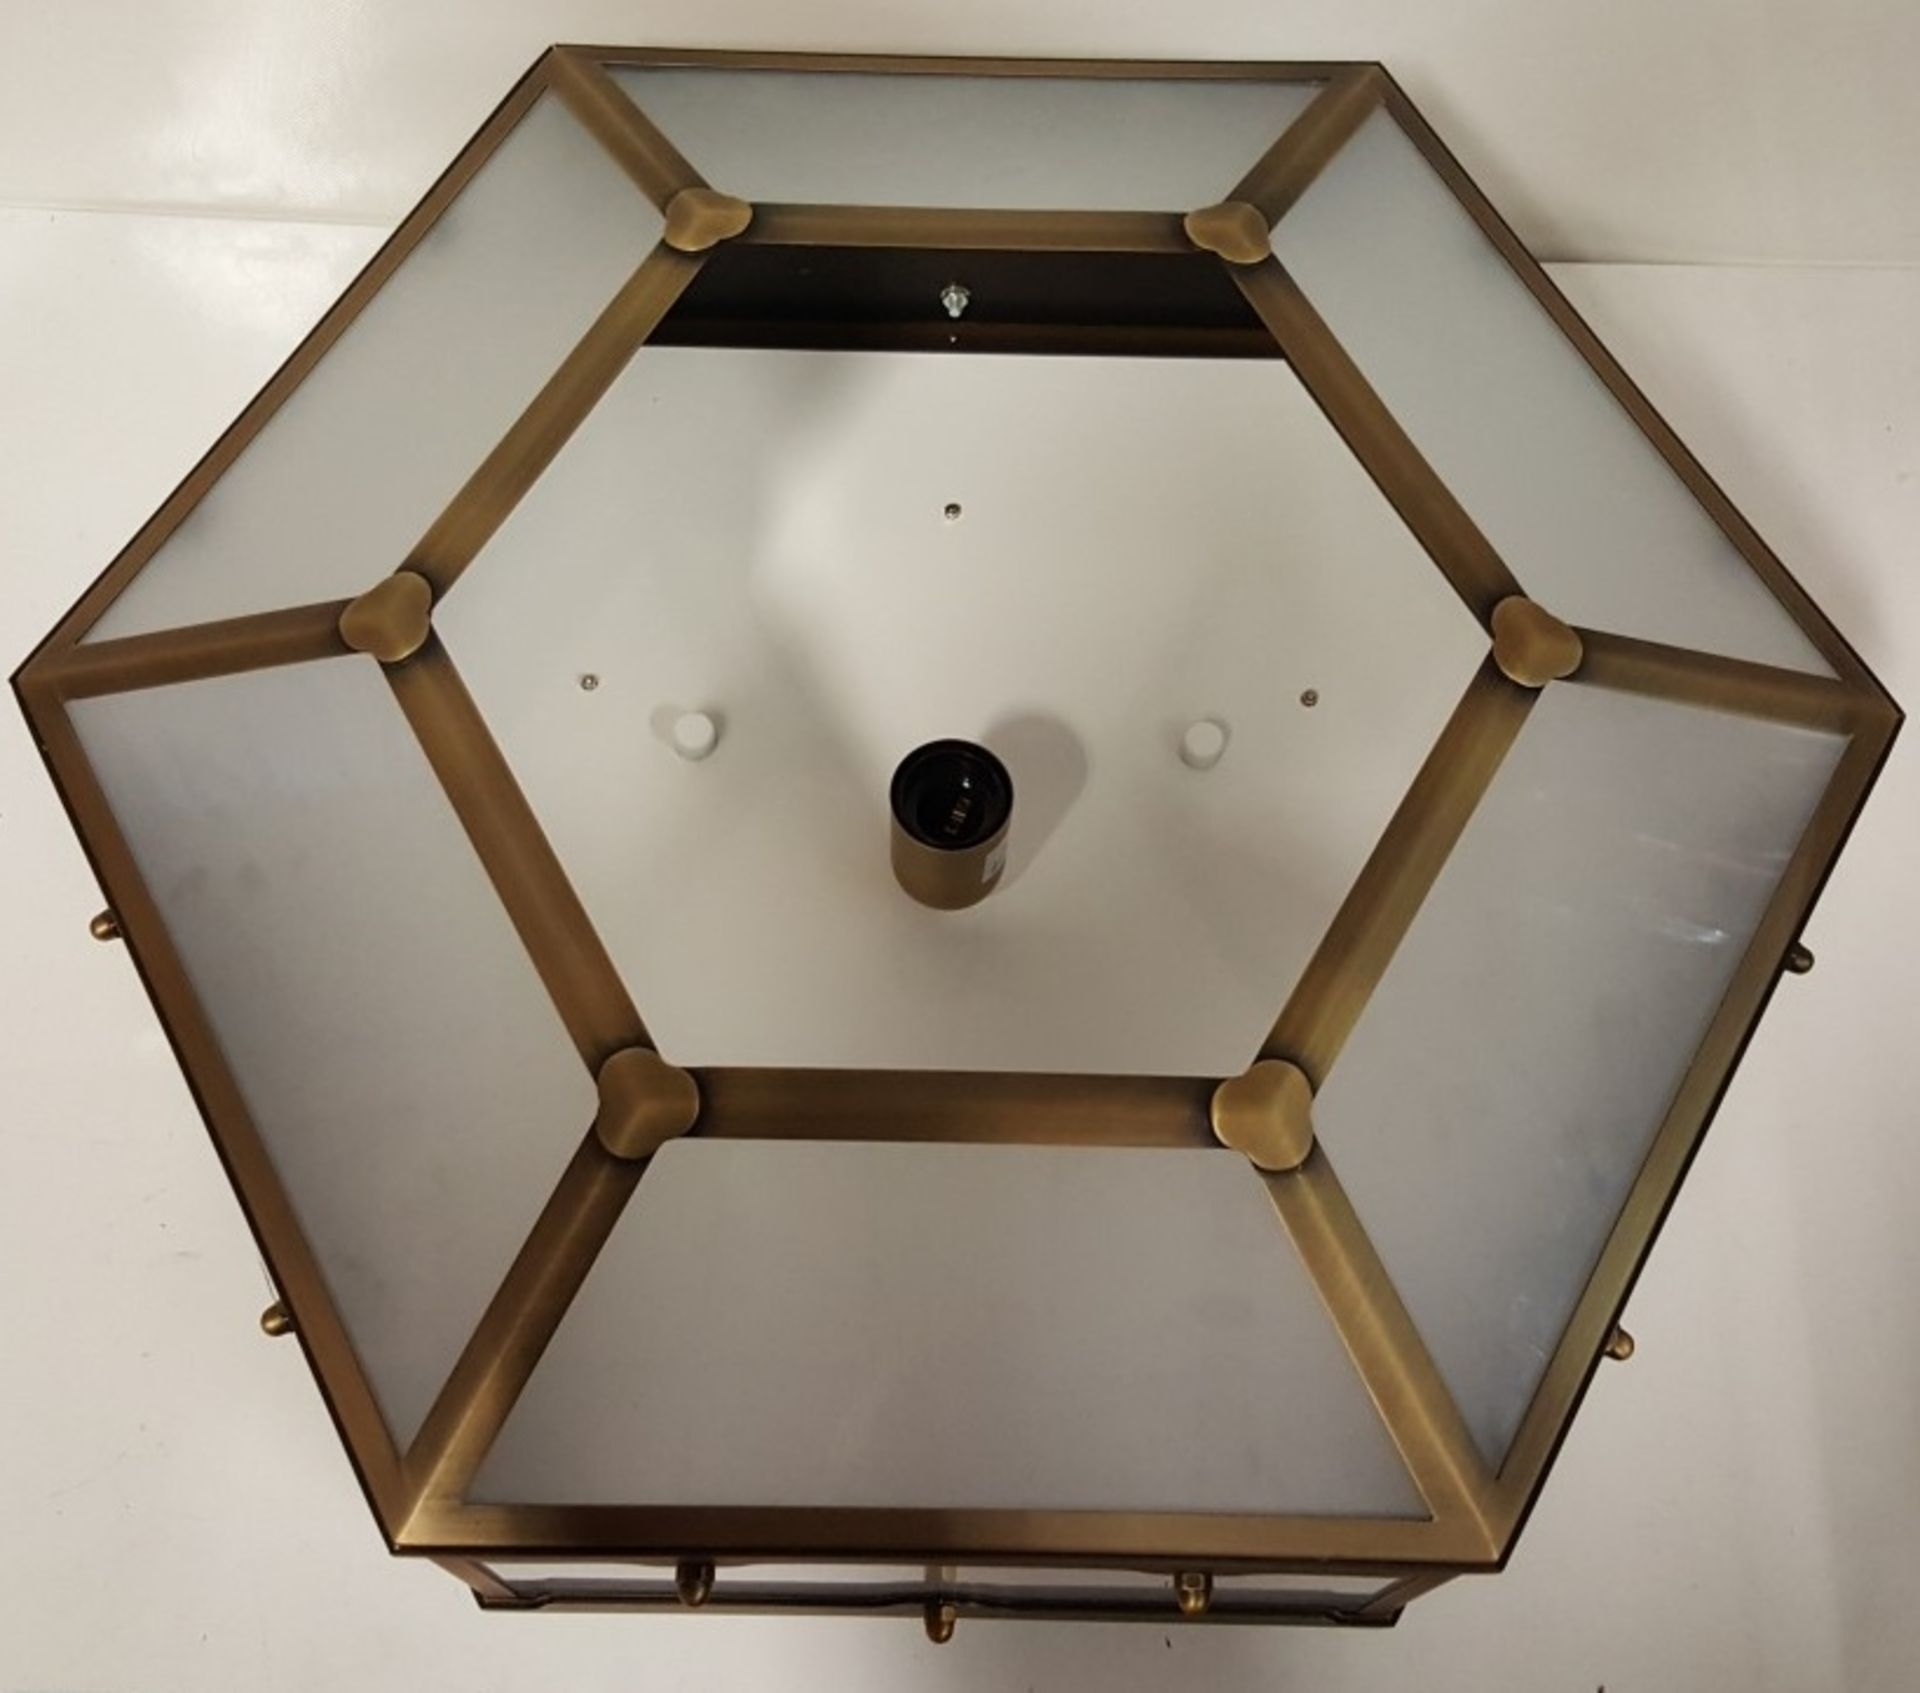 1 x Chelsom Flush Fitting Hexagonal Shaped Light Fitting In A Antique Brass Finish - REF715